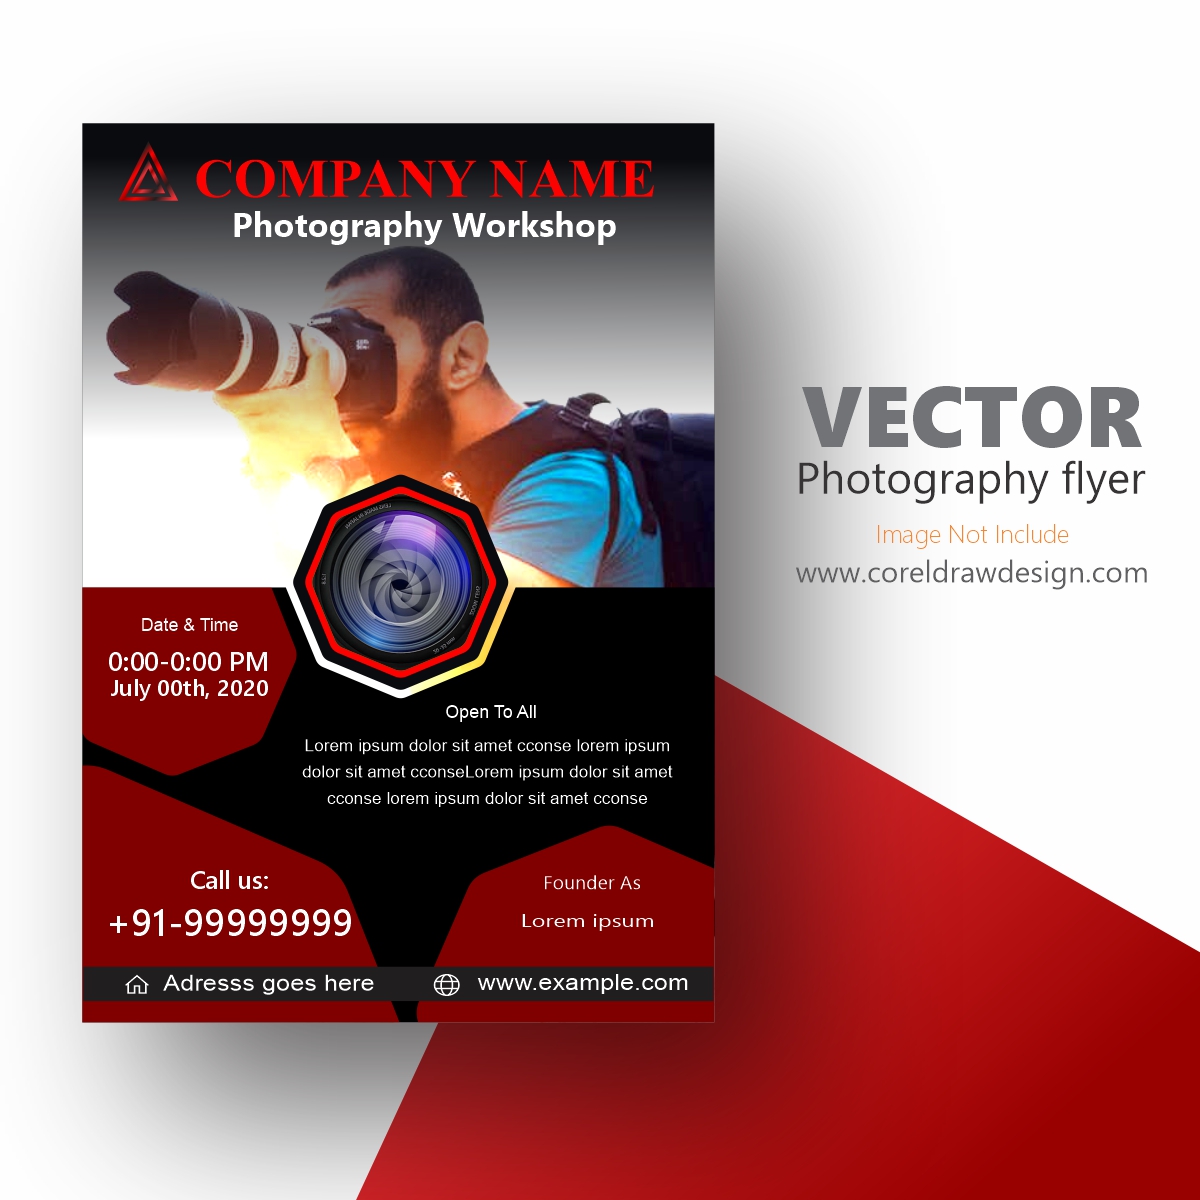 VECTOR Photography flyer